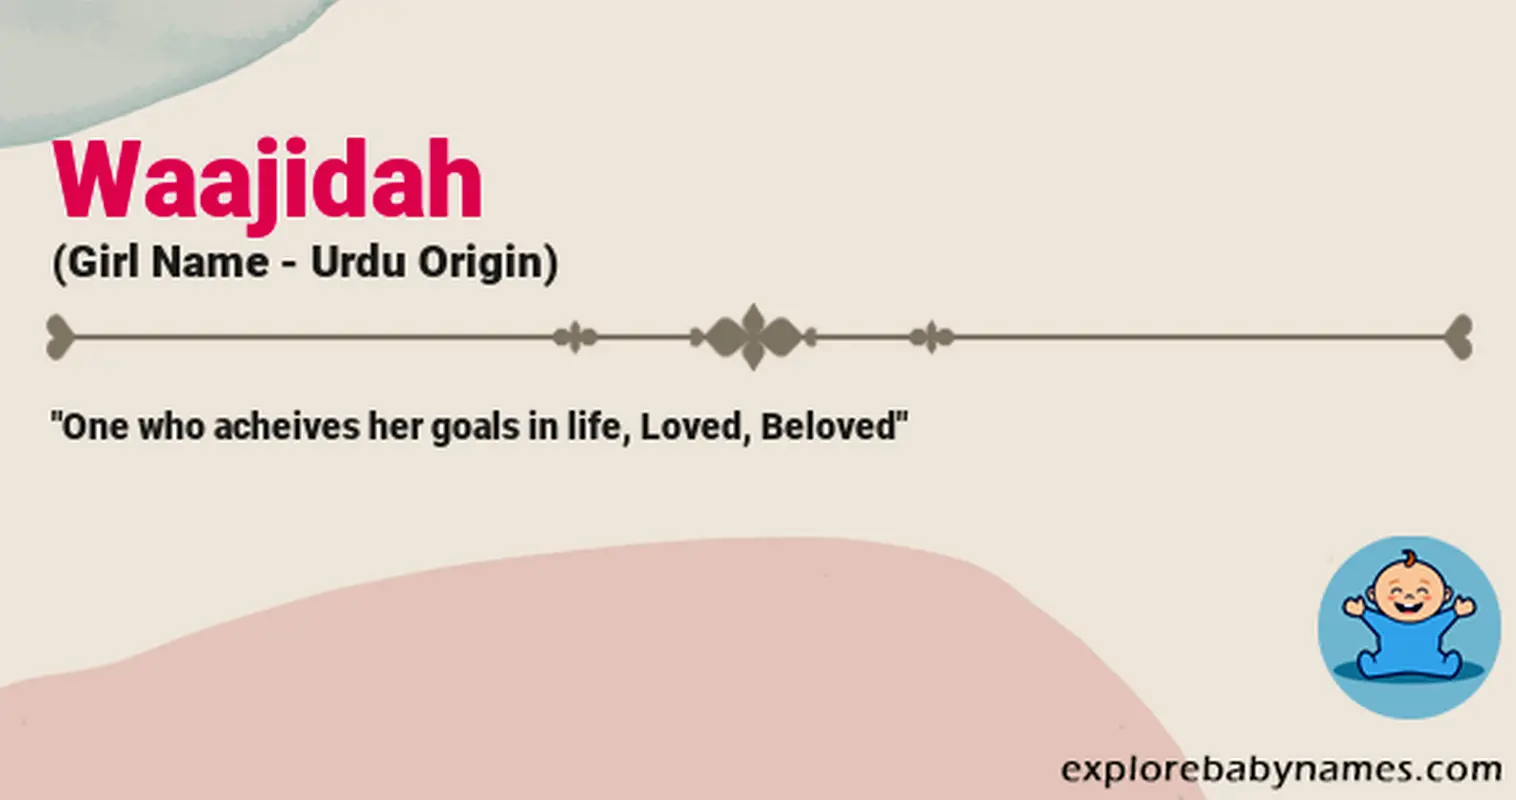 Meaning of Waajidah